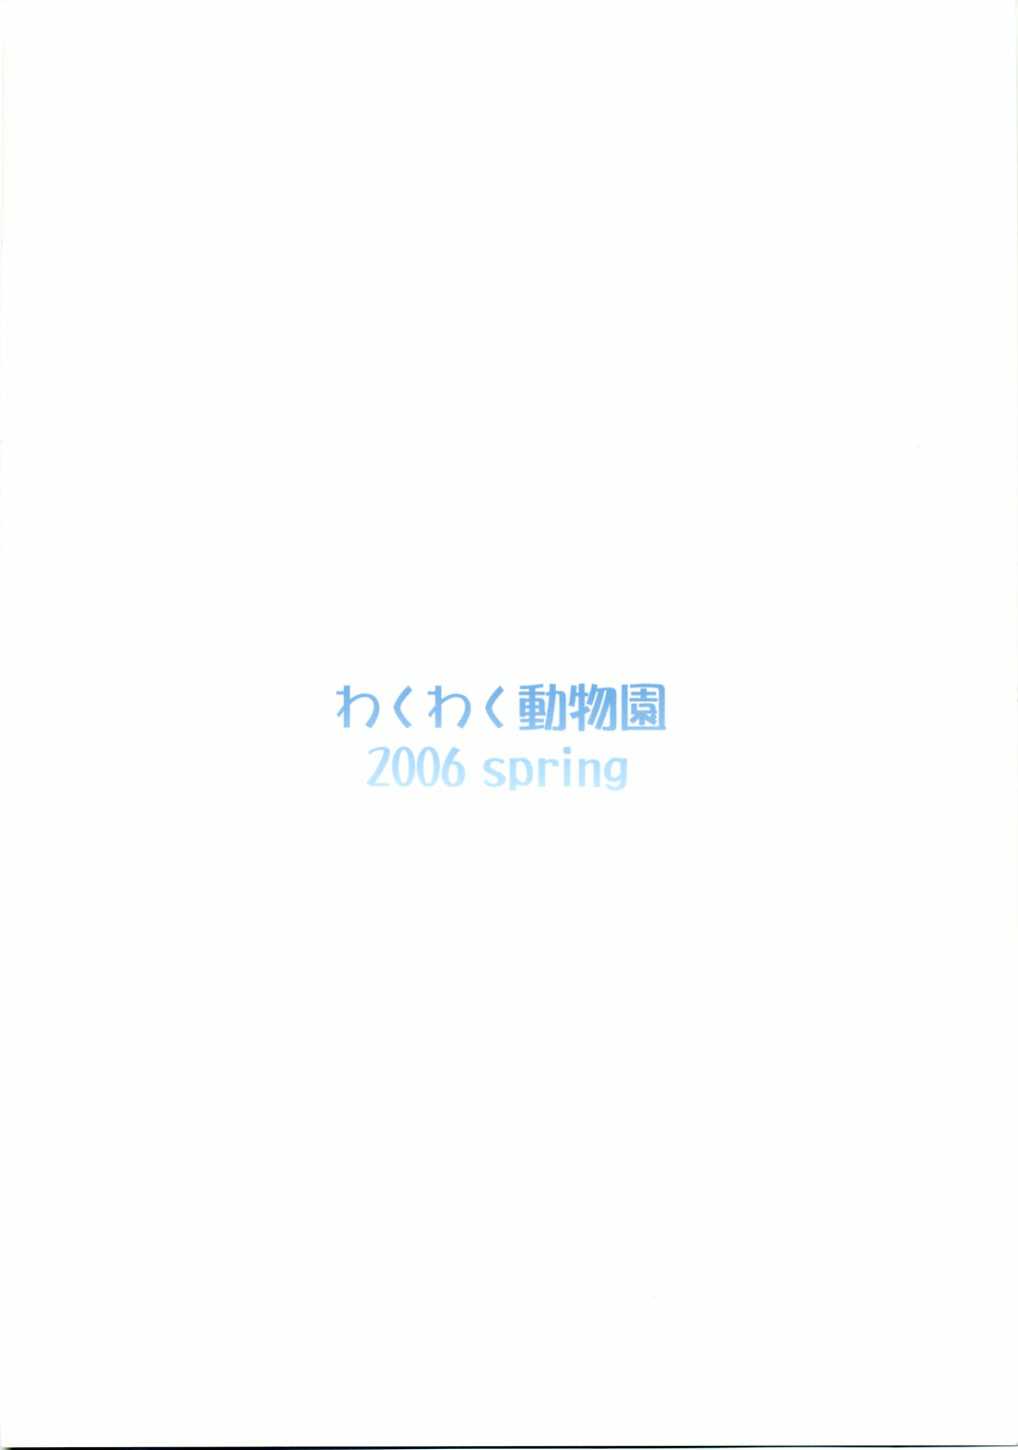 [WakuWaku Doubutsuen (Tennouji Kitsune)] blue snow blue scene.3 [わくわく動物園 (天王寺きつね)] blue snow blue scene.3